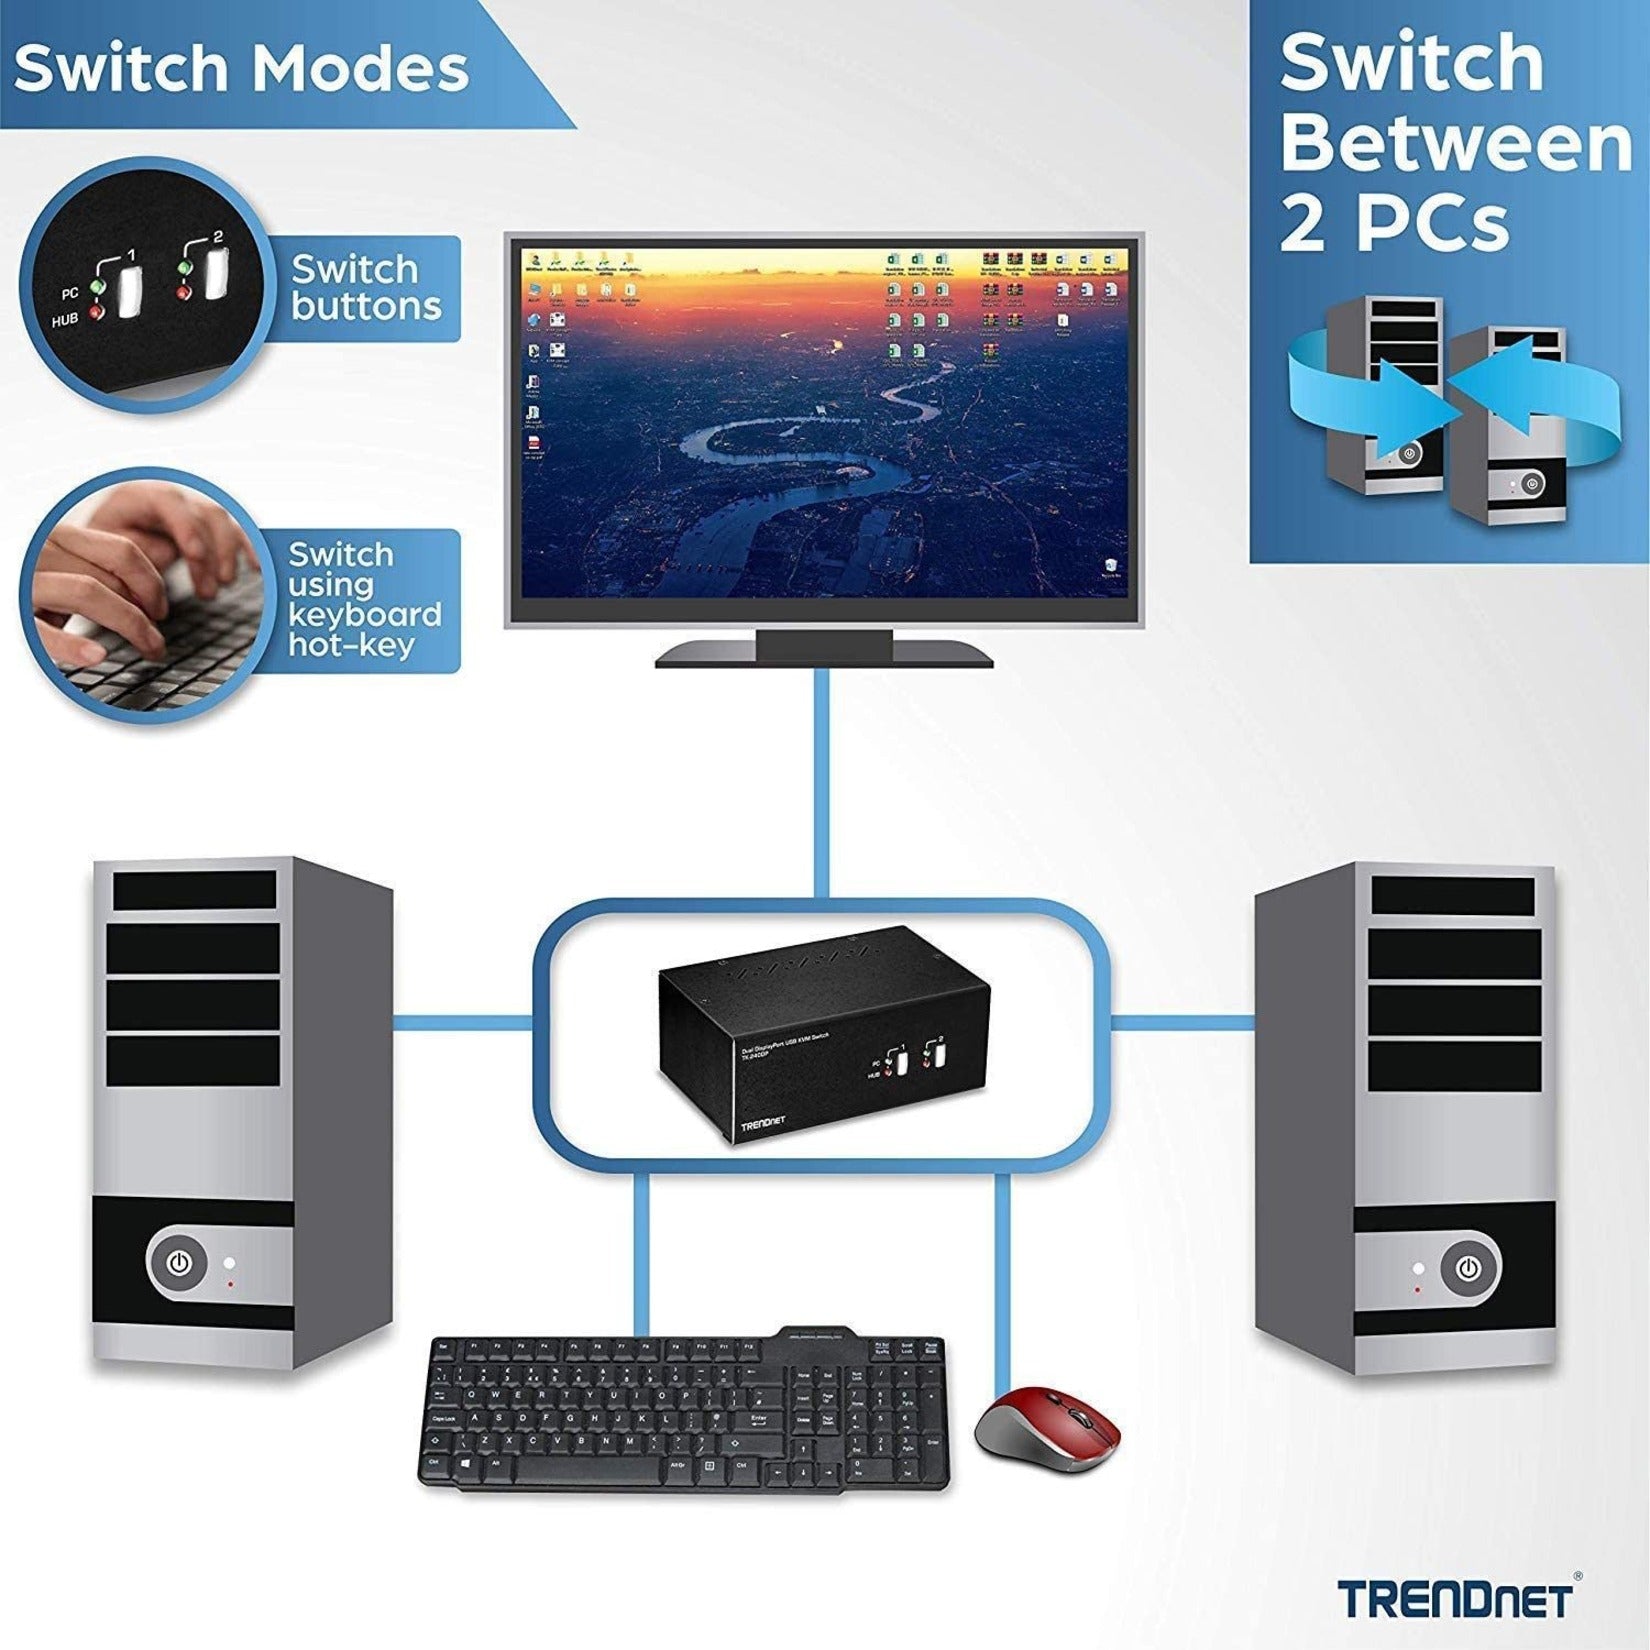 TRENDnet TK-240DP 2-Port デュアルモニター DisplayPort KVM スイッチ、3840 x 2160 解像度、TAA 準拠